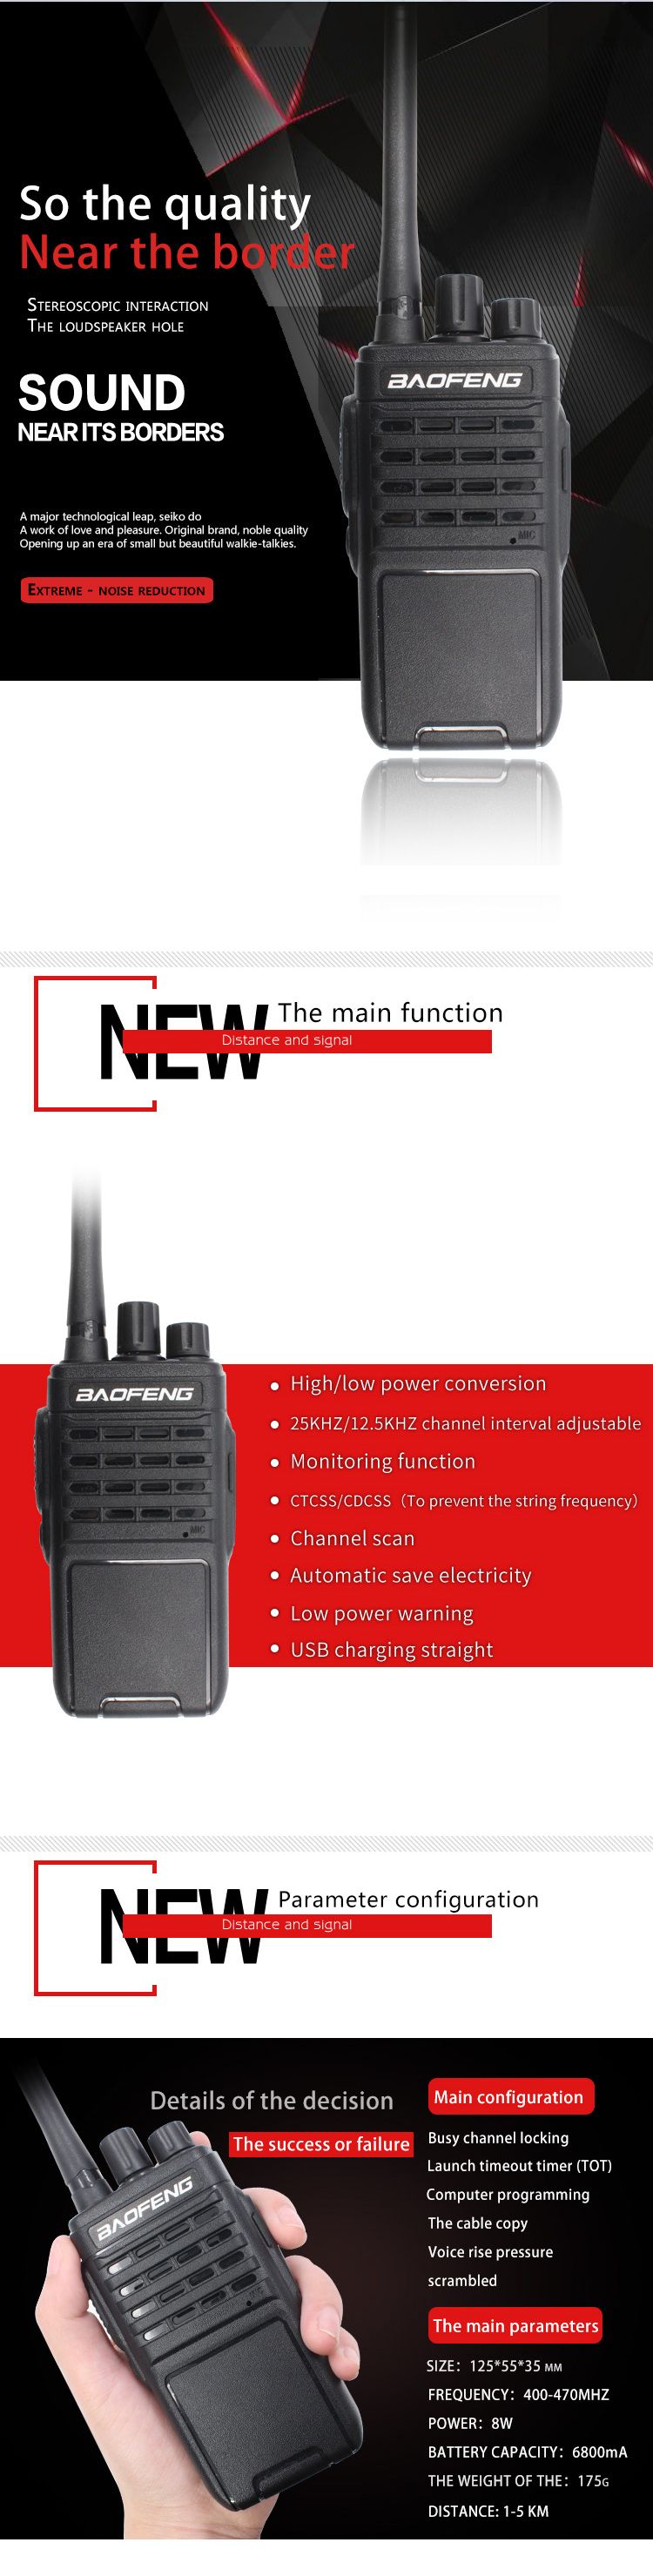 Baofeng-P3-8W-Mini-Ultra-Thin-Handheld-Radio-Walkie-Talkie-Scanning-Intercom-Civilian-Interphone-1624076